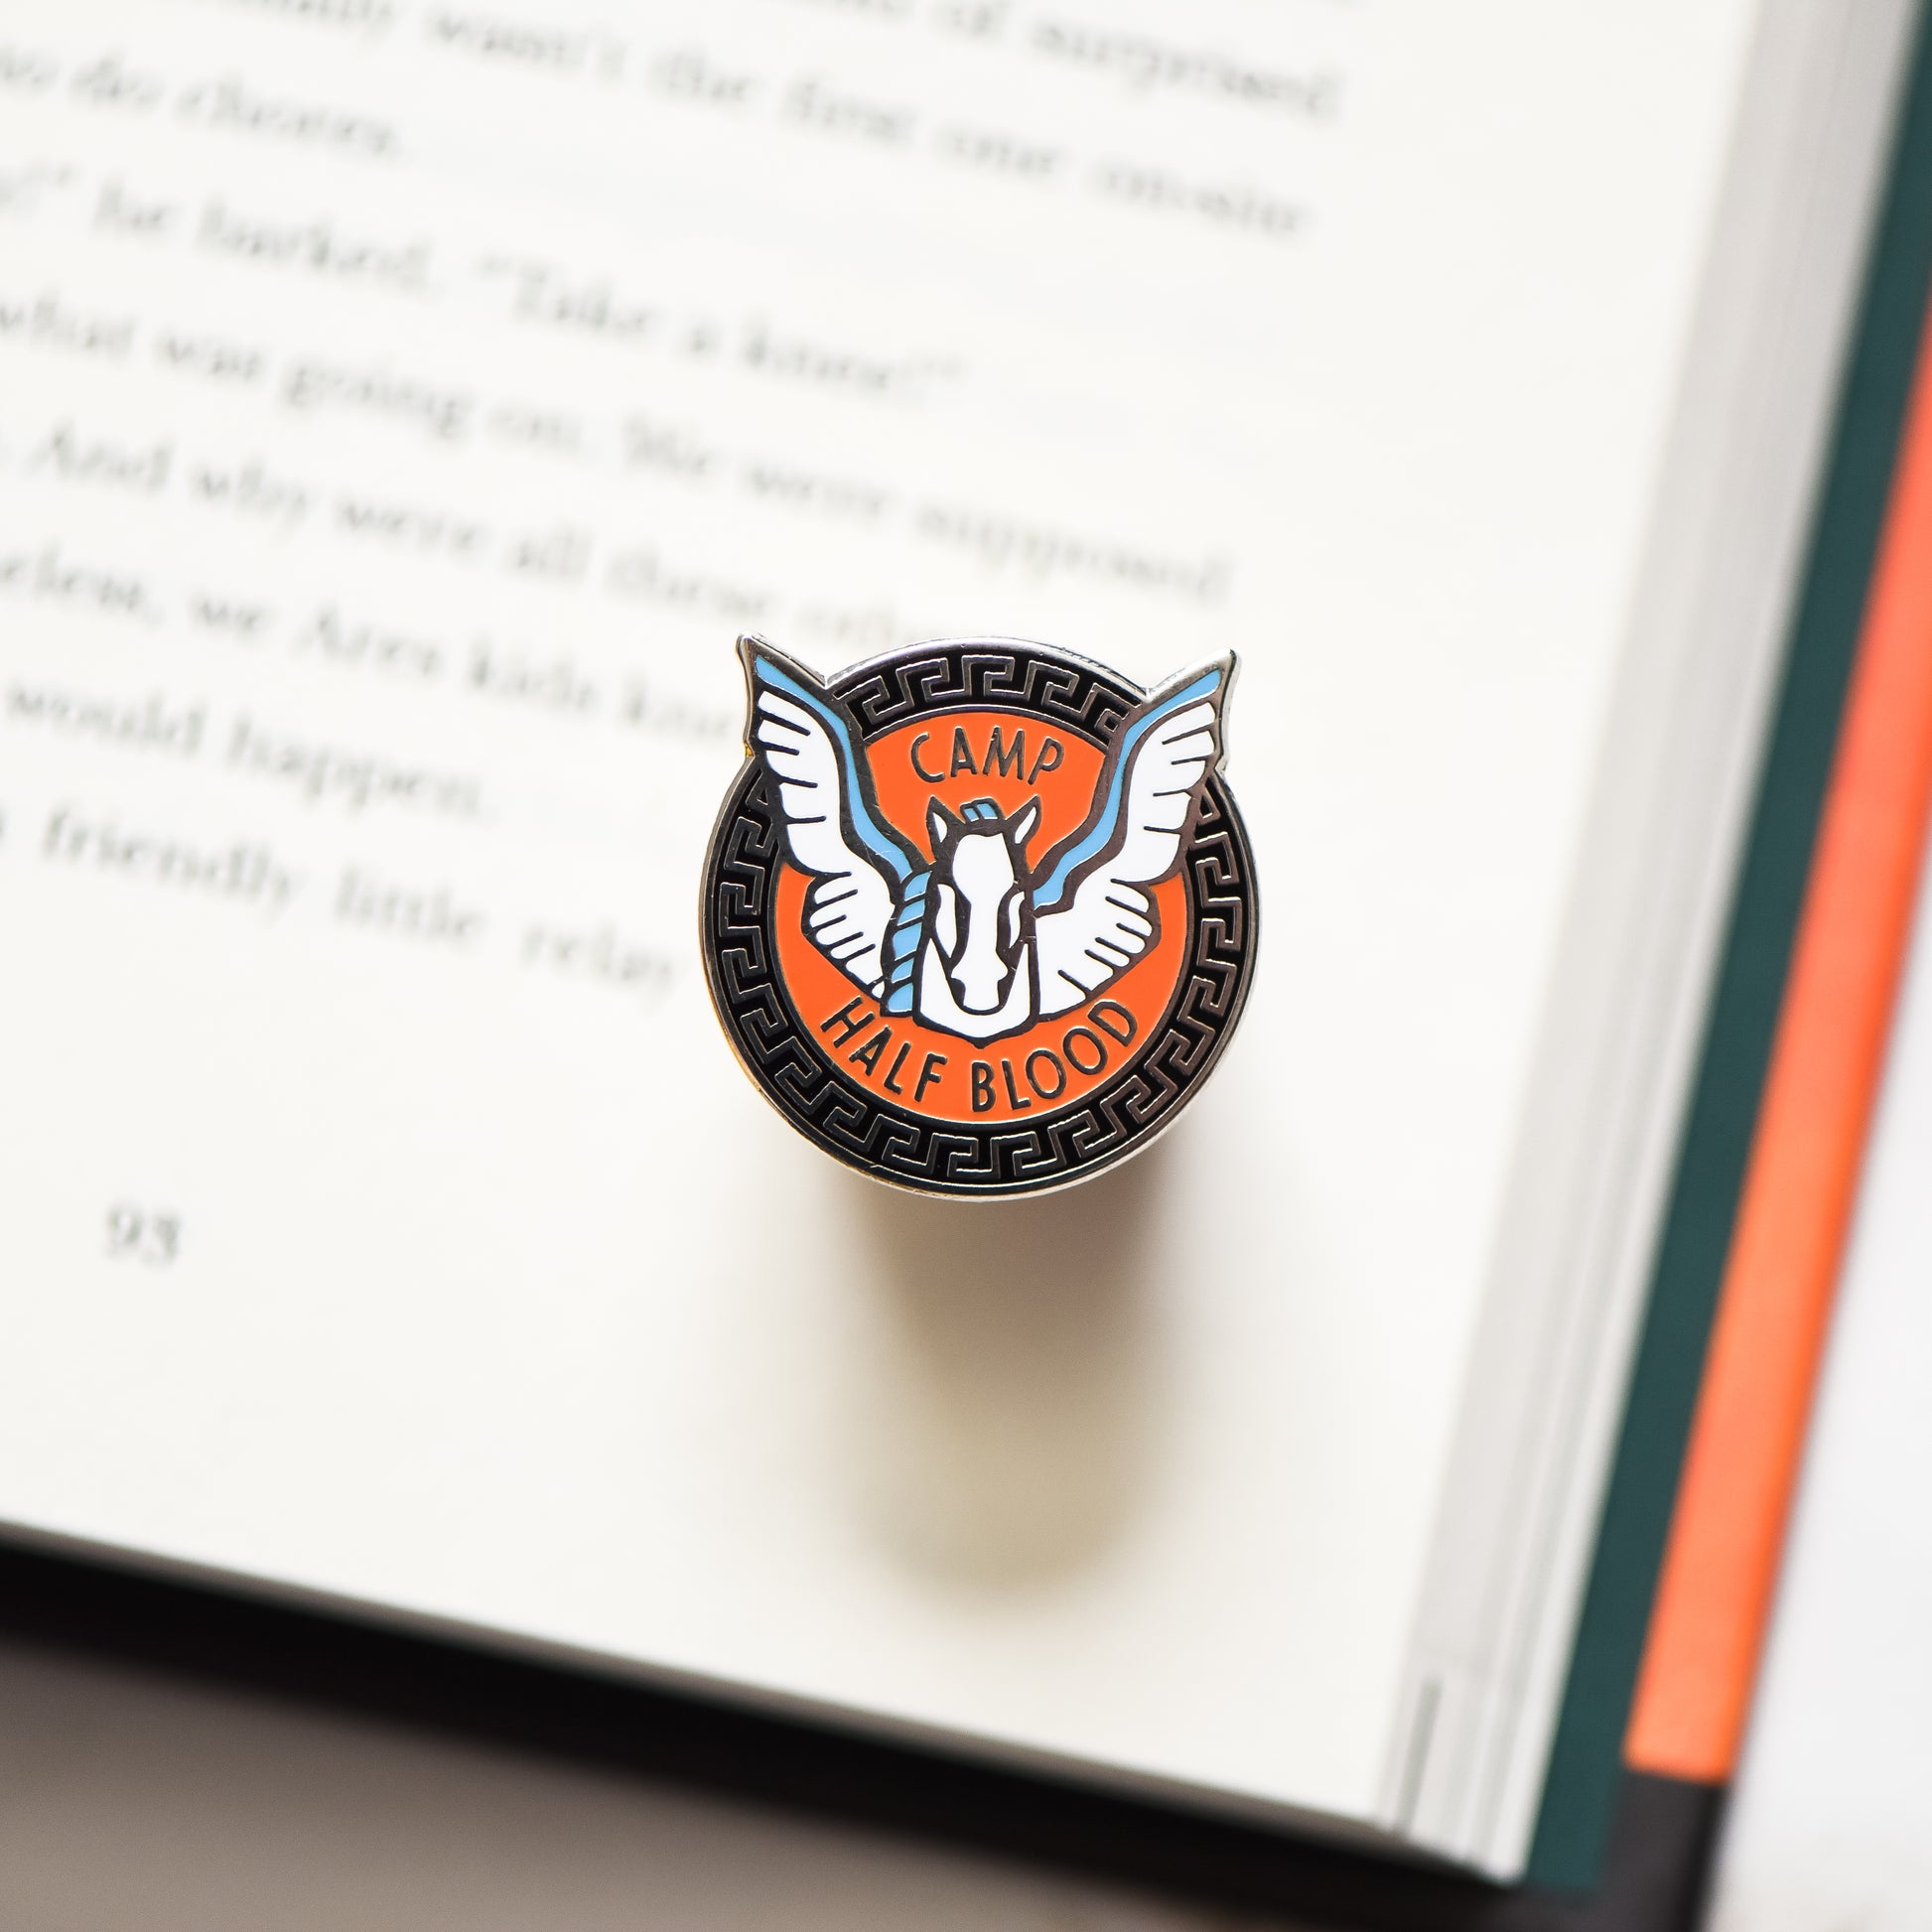 Pegasus horse membership style pin on a Percy Jackson book